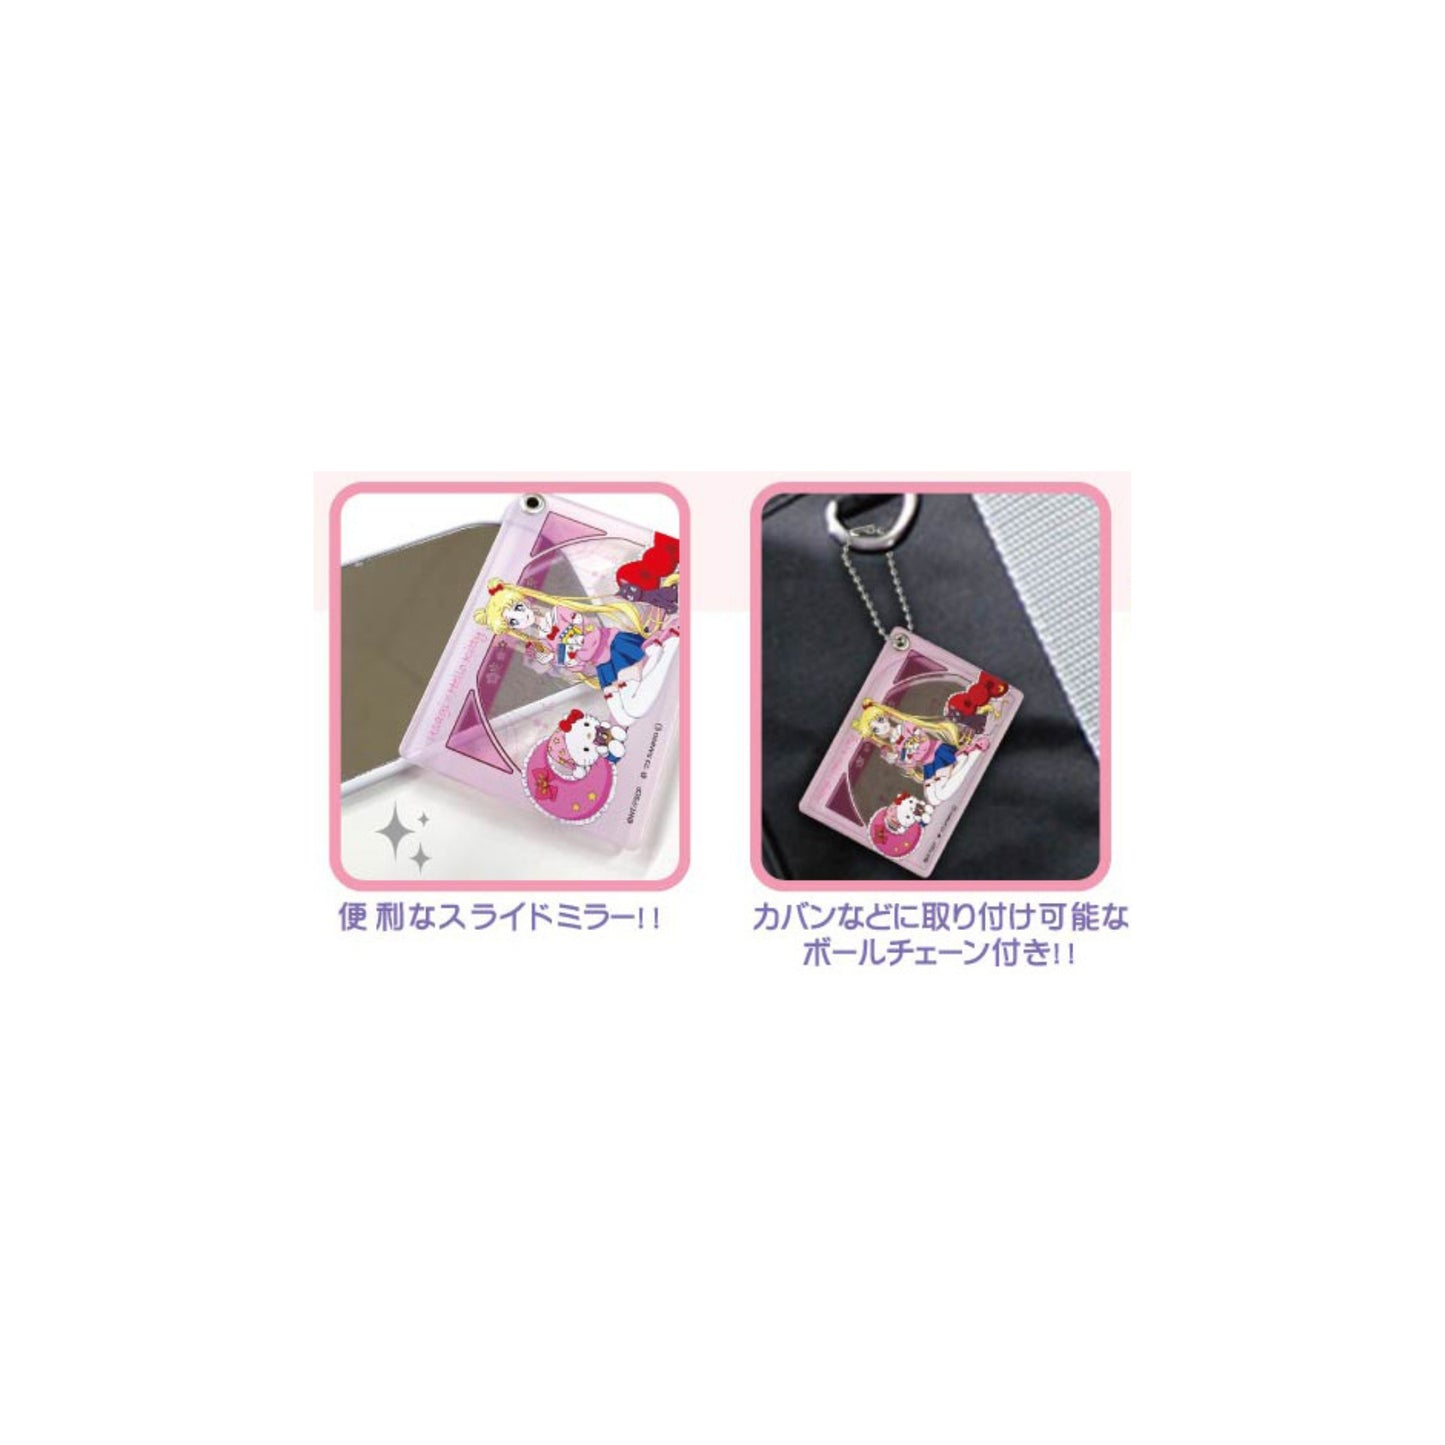 Sailor Moon x Sanrio Characters - Slide Mirror: Usagi x Hello Kitty